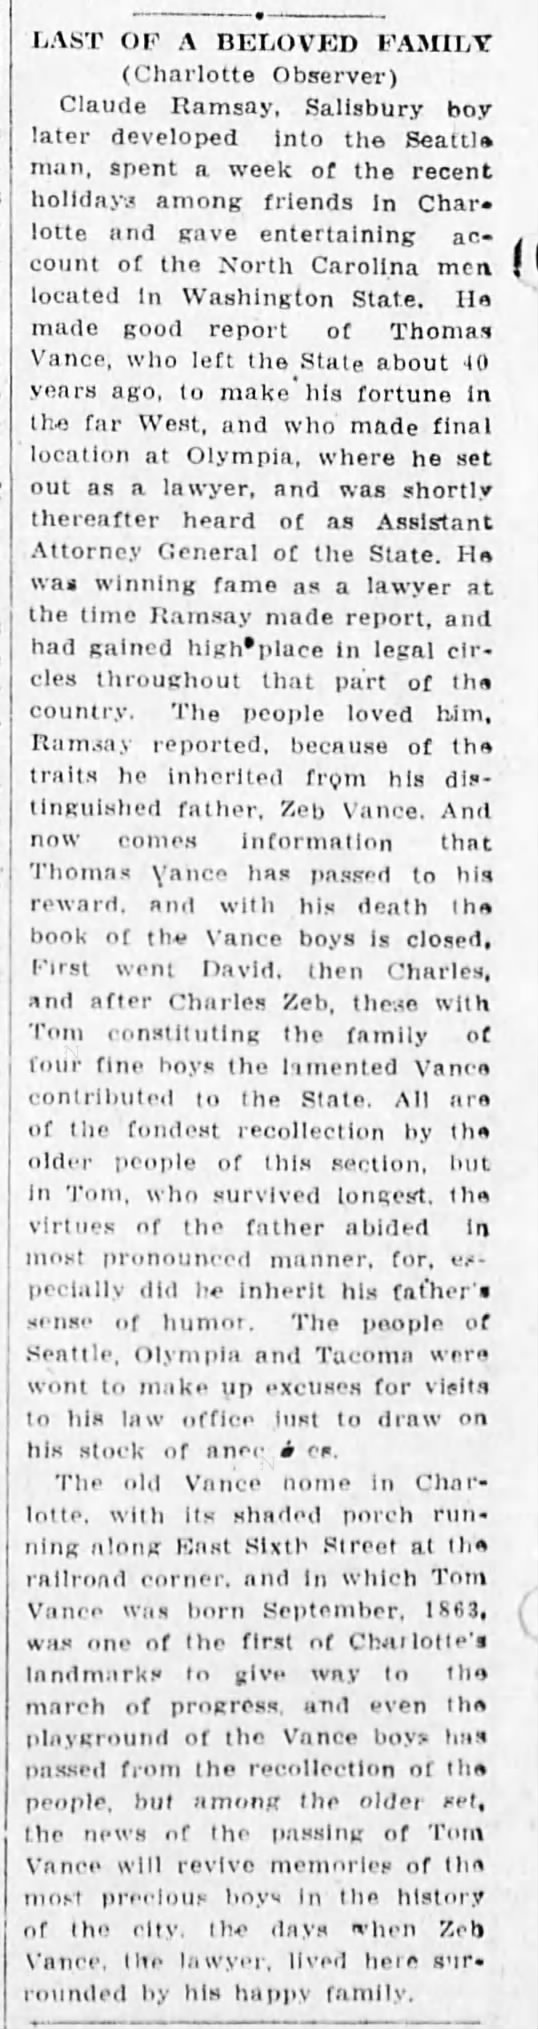 Last of the VANCE boys (Thomas) diesbi 1928.